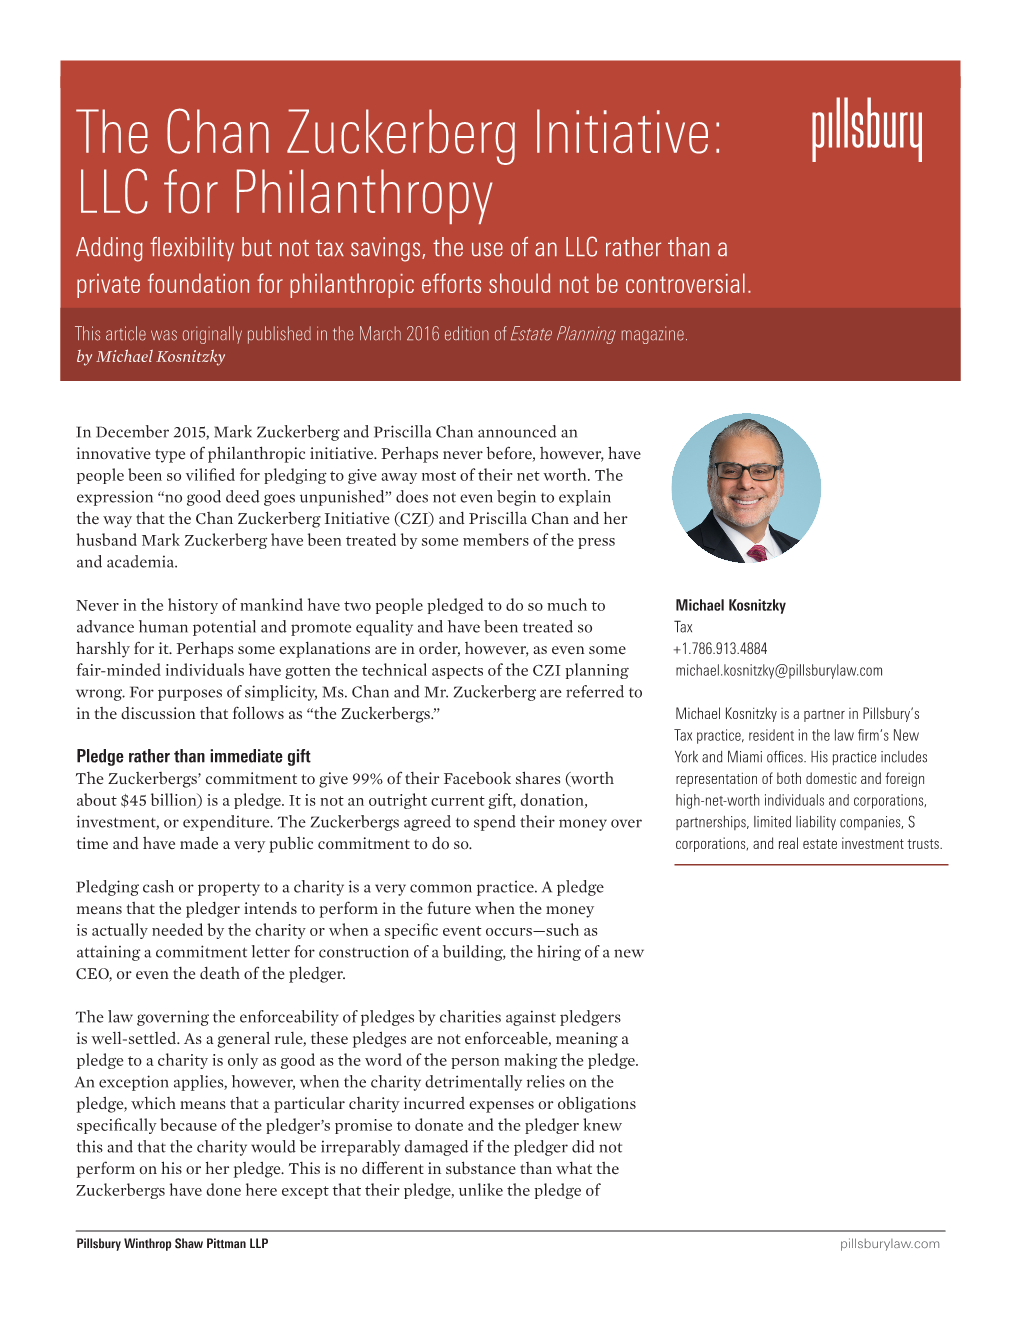 The Chan Zuckerberg Initiative: LLC for Philanthropy